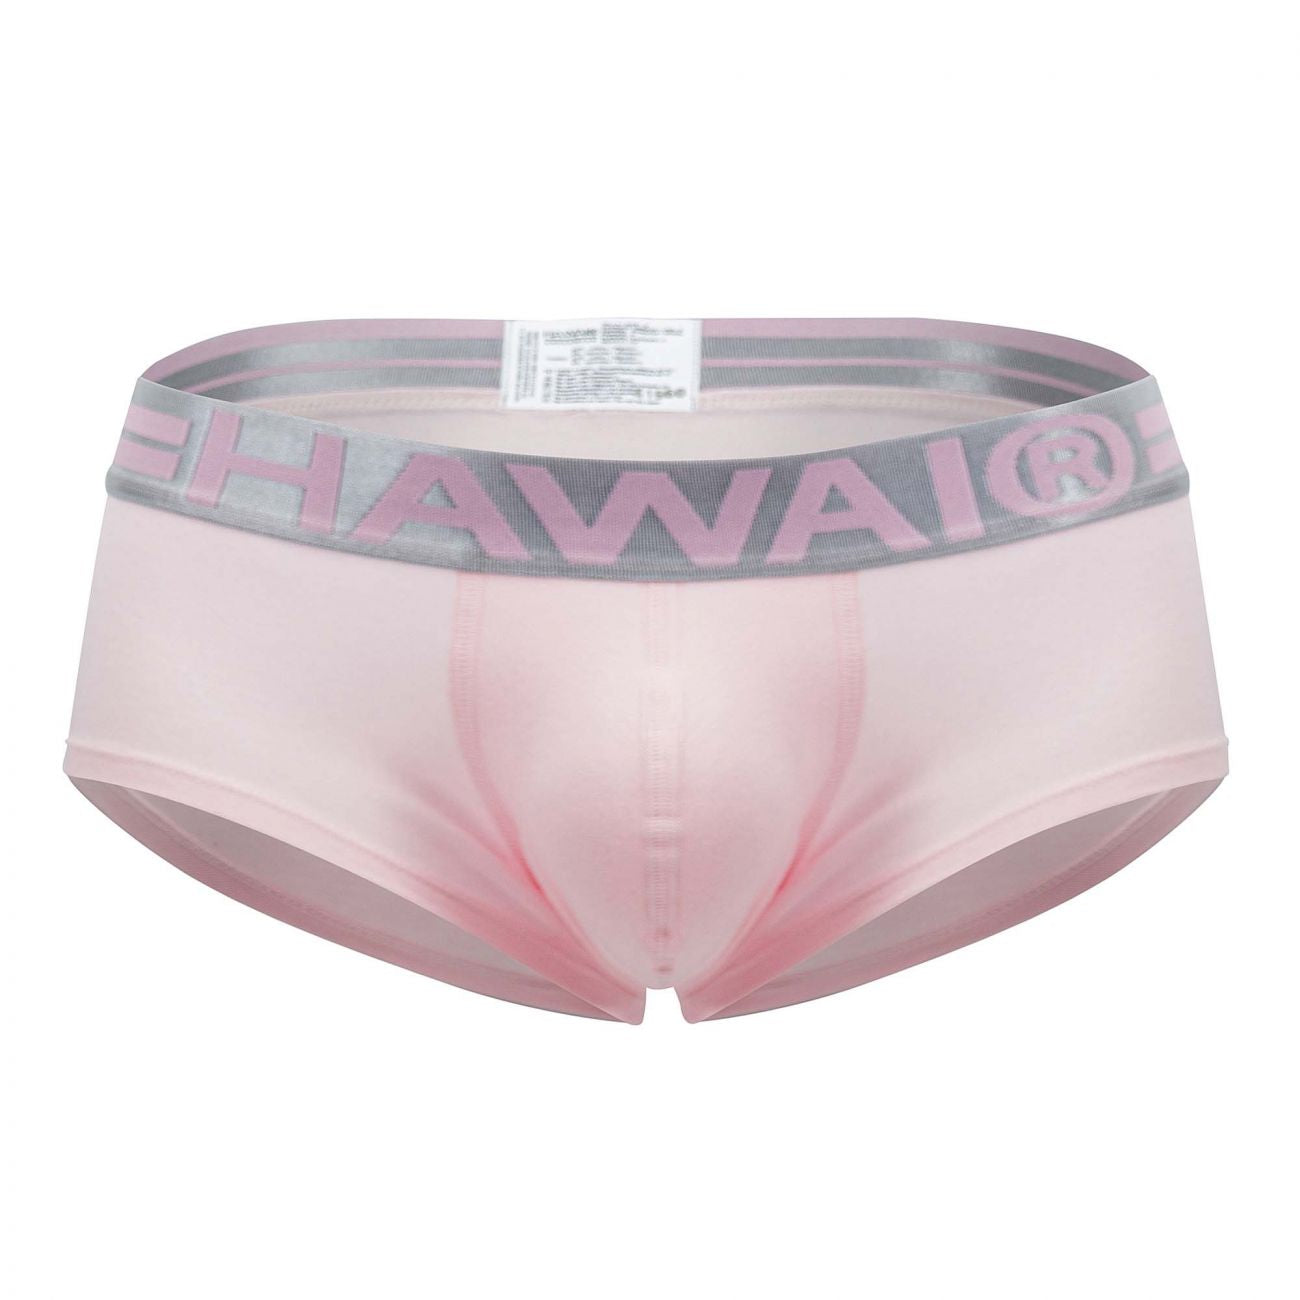 HAWAI 41960 Cotton Trunks Pink